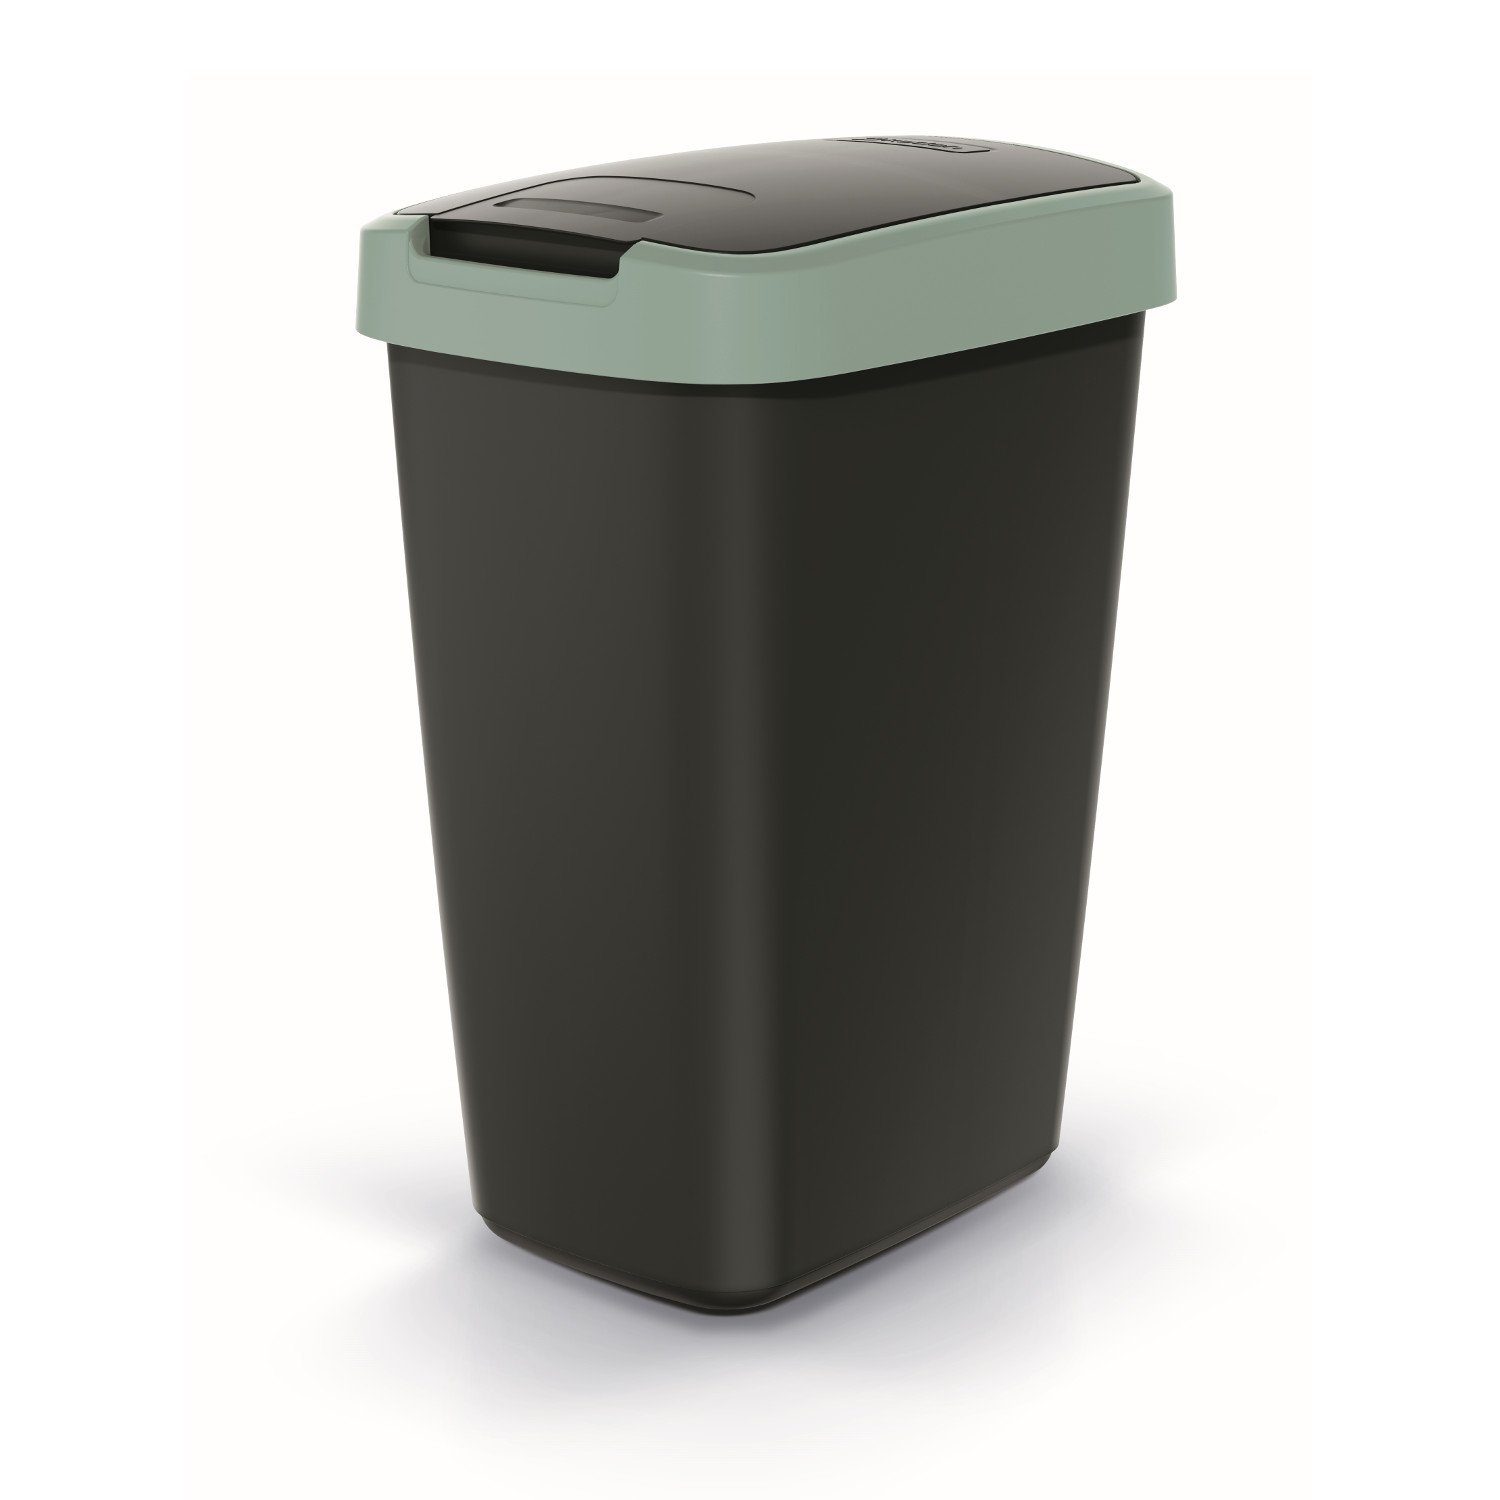 Keden Mülleimer Compacta Q, Abfallbehälter 12l mit Deckel KEDEN COMPACTA Q Grün